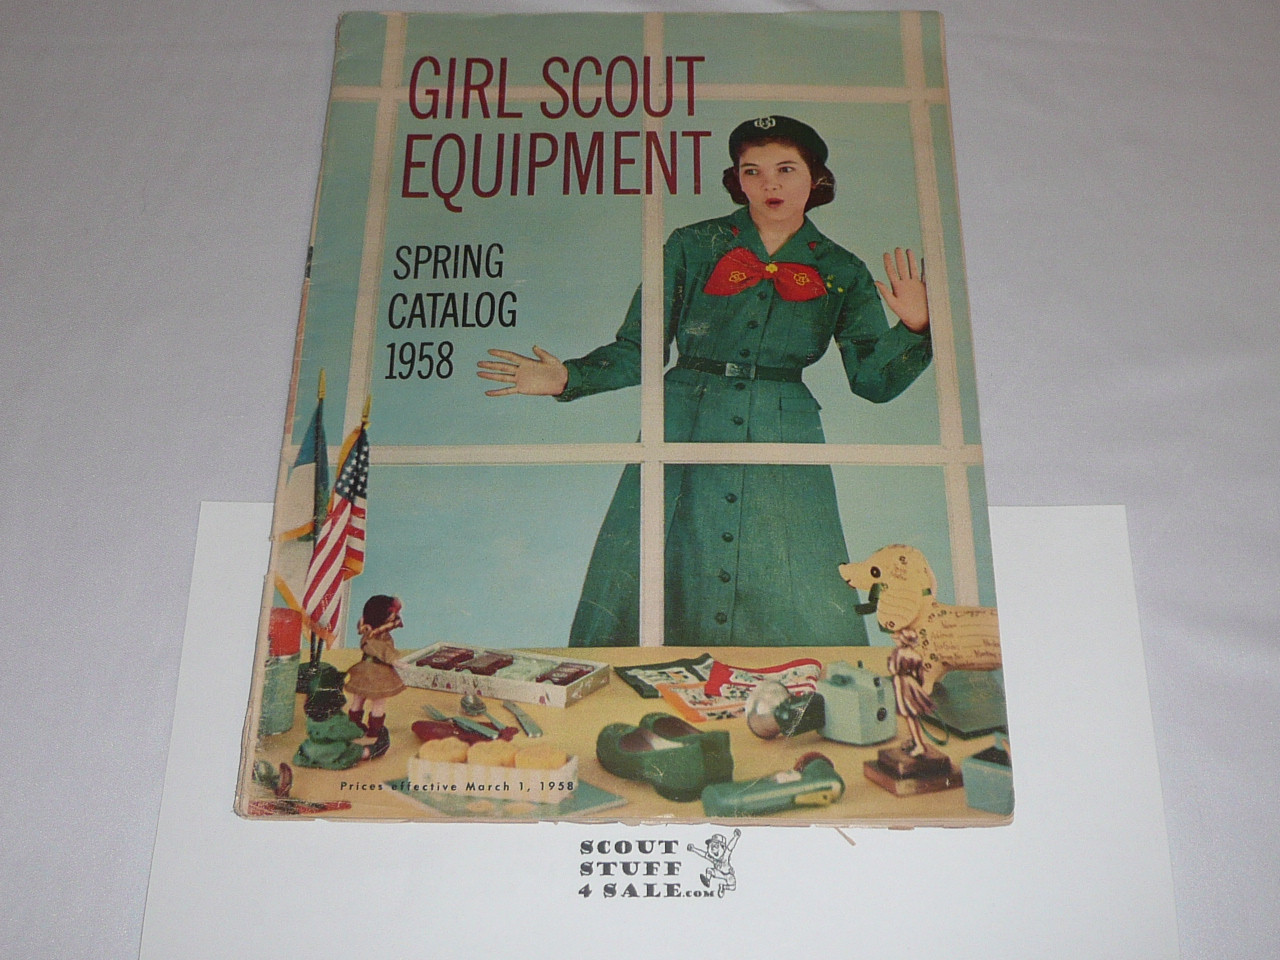 Girl Scout Equipment Catalog, Spring 1958